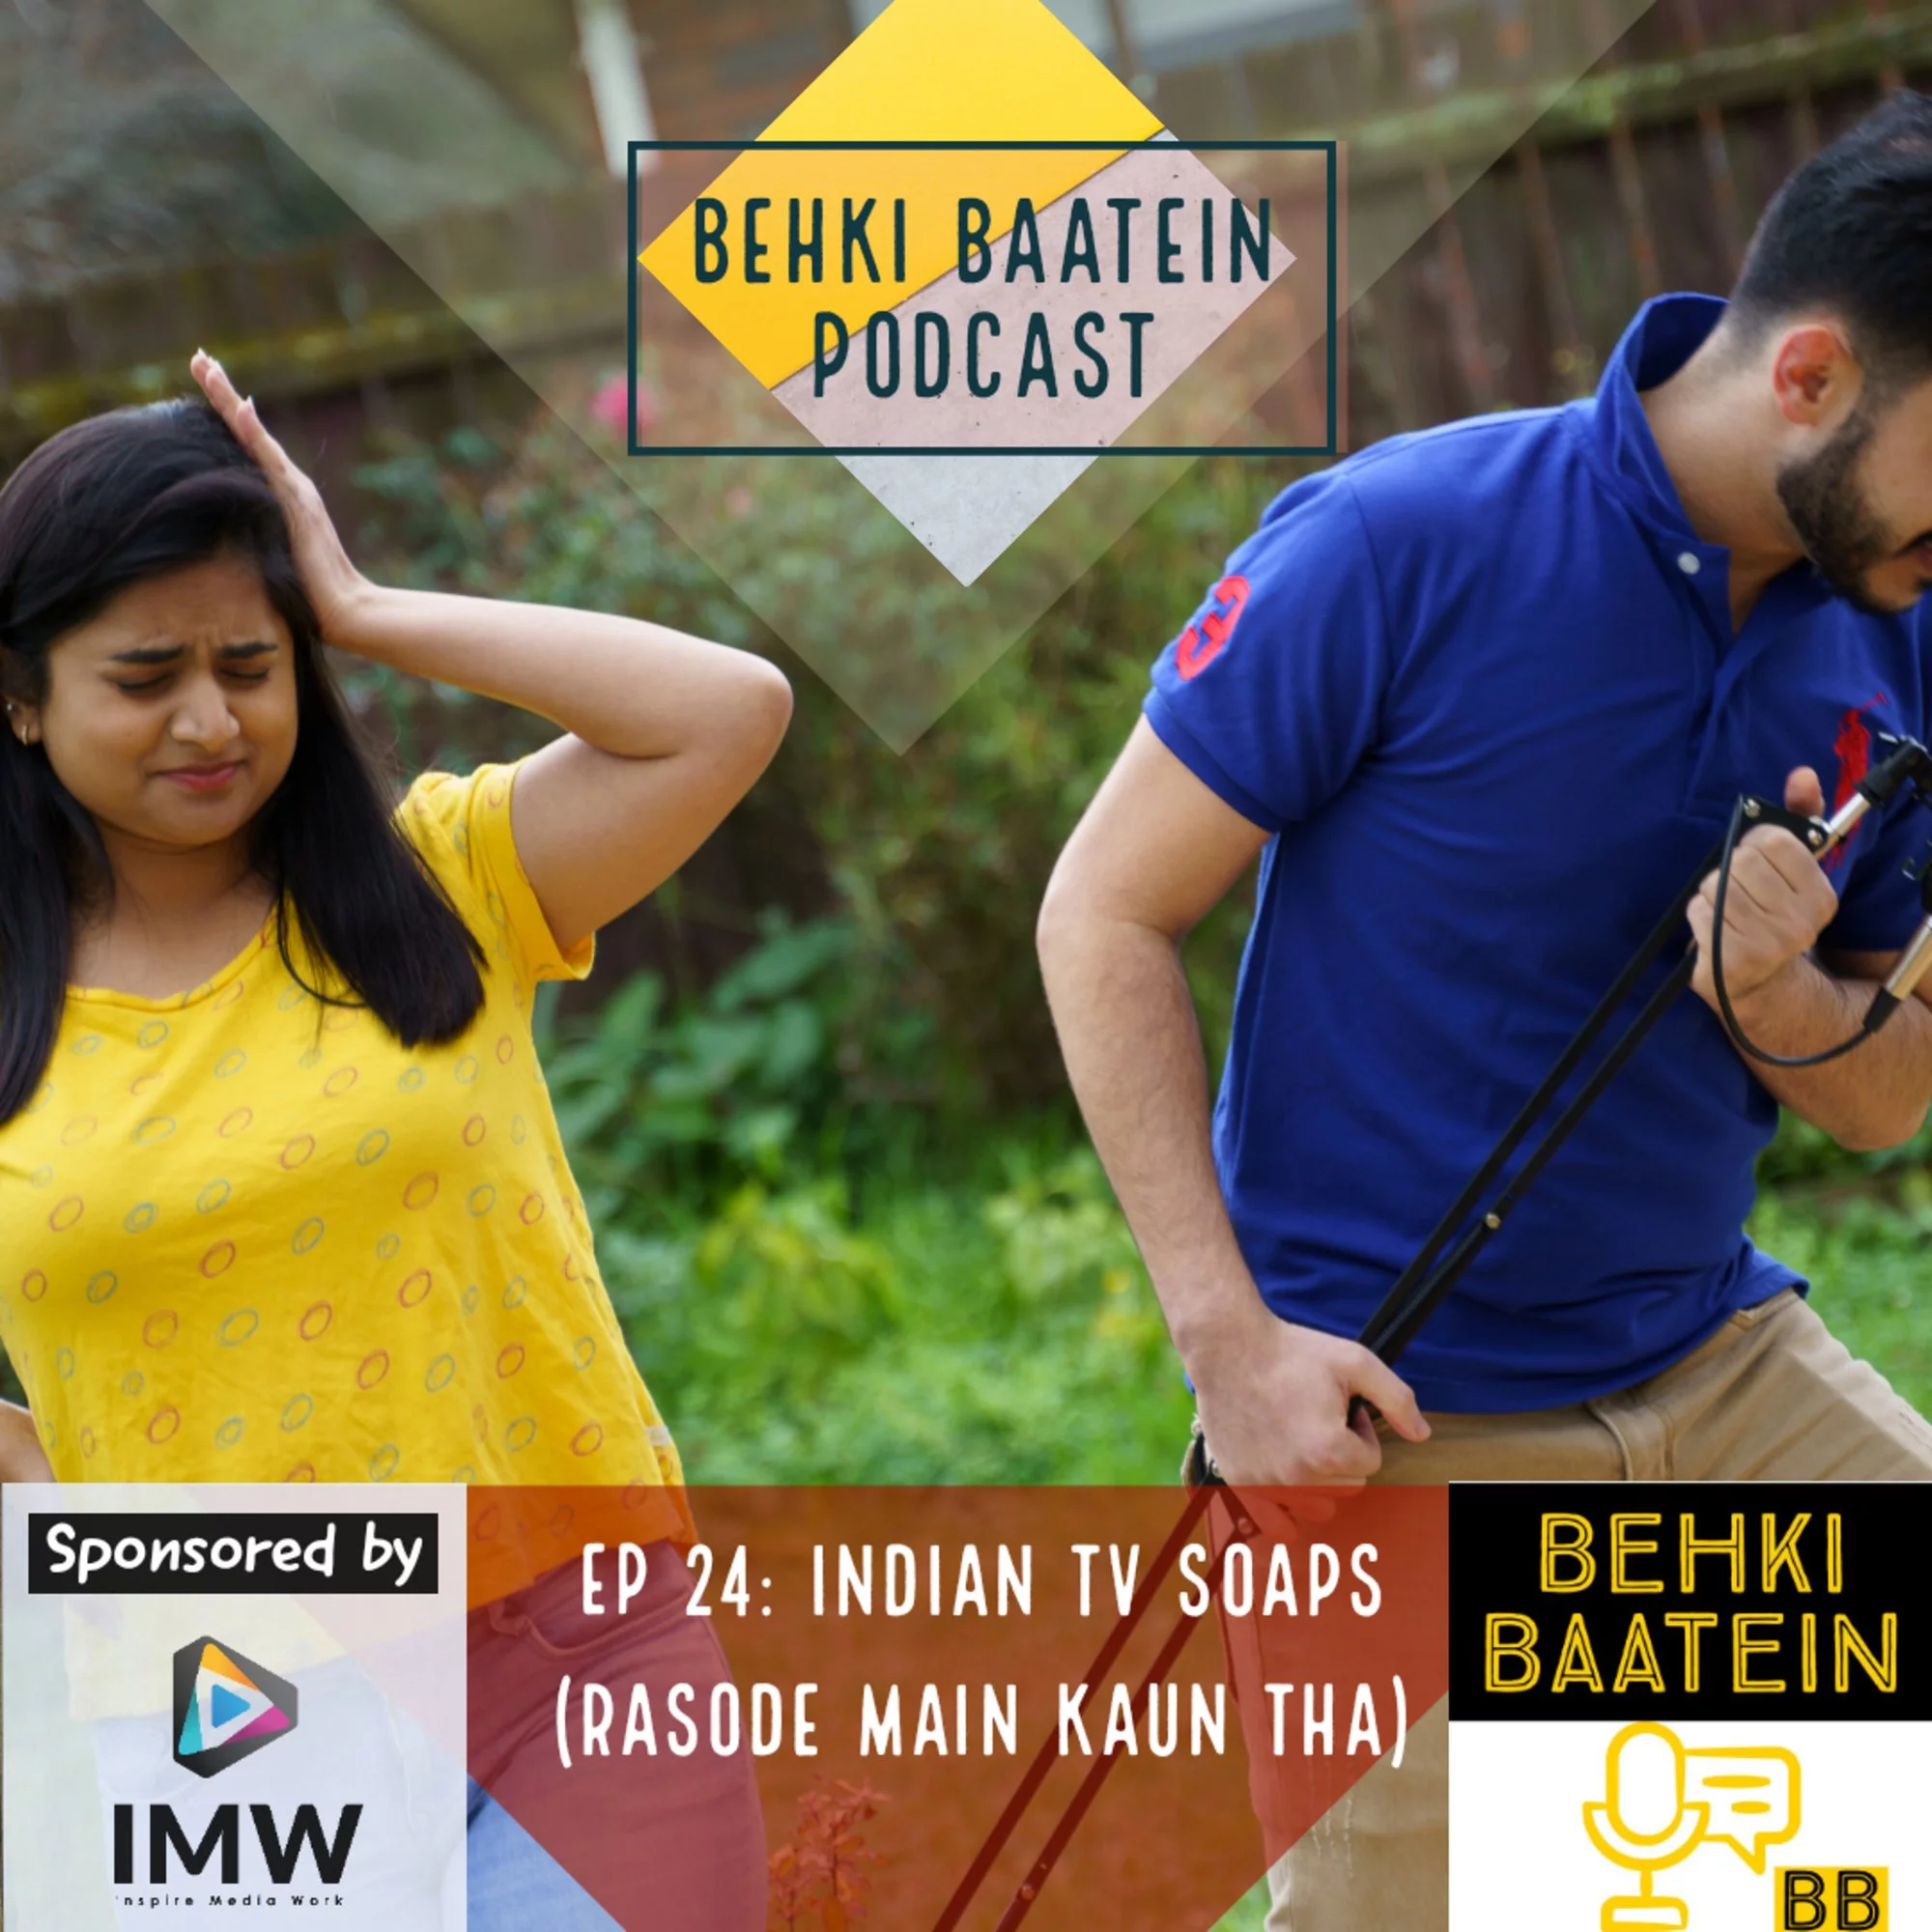 EP 24: Indian TV Soaps- "Rasode mai kaun tha?" - With Ruzbeh Palsetia and Devika Mhetar